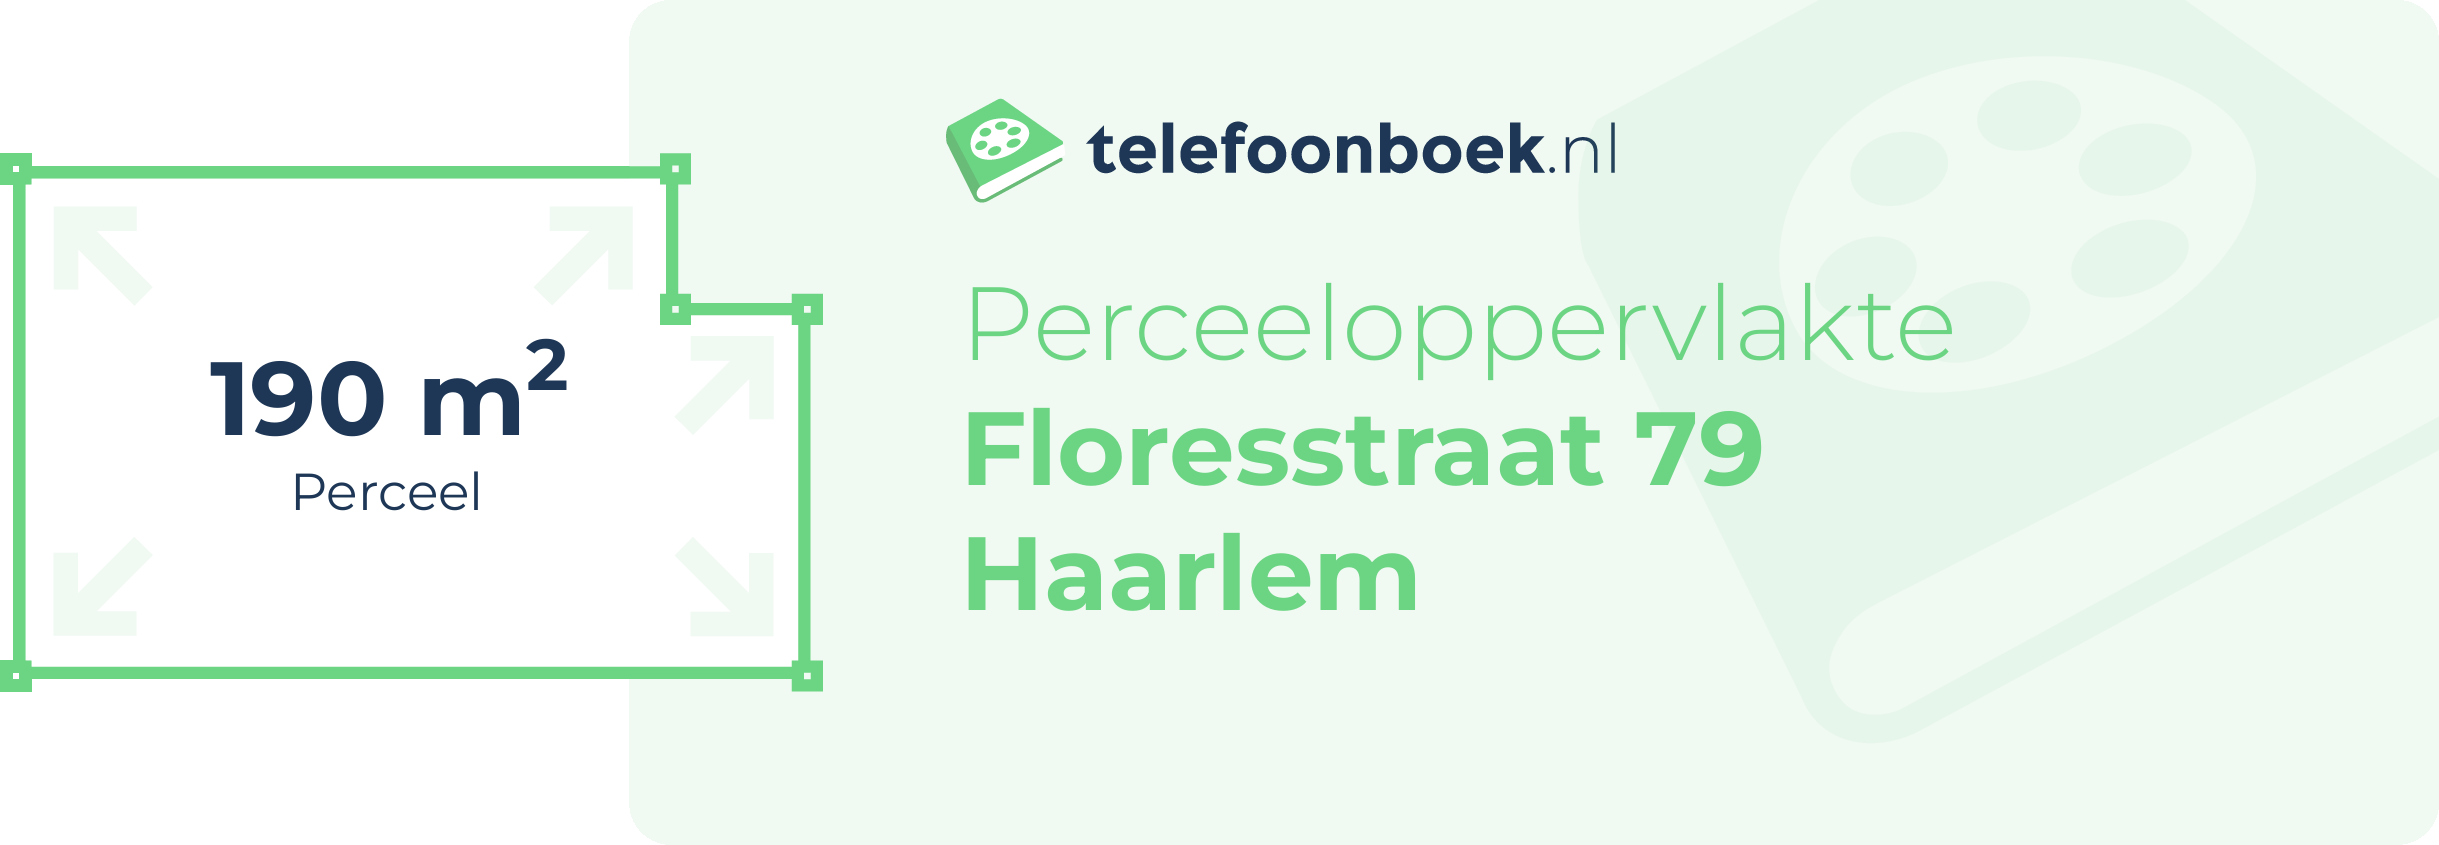 Perceeloppervlakte Floresstraat 79 Haarlem